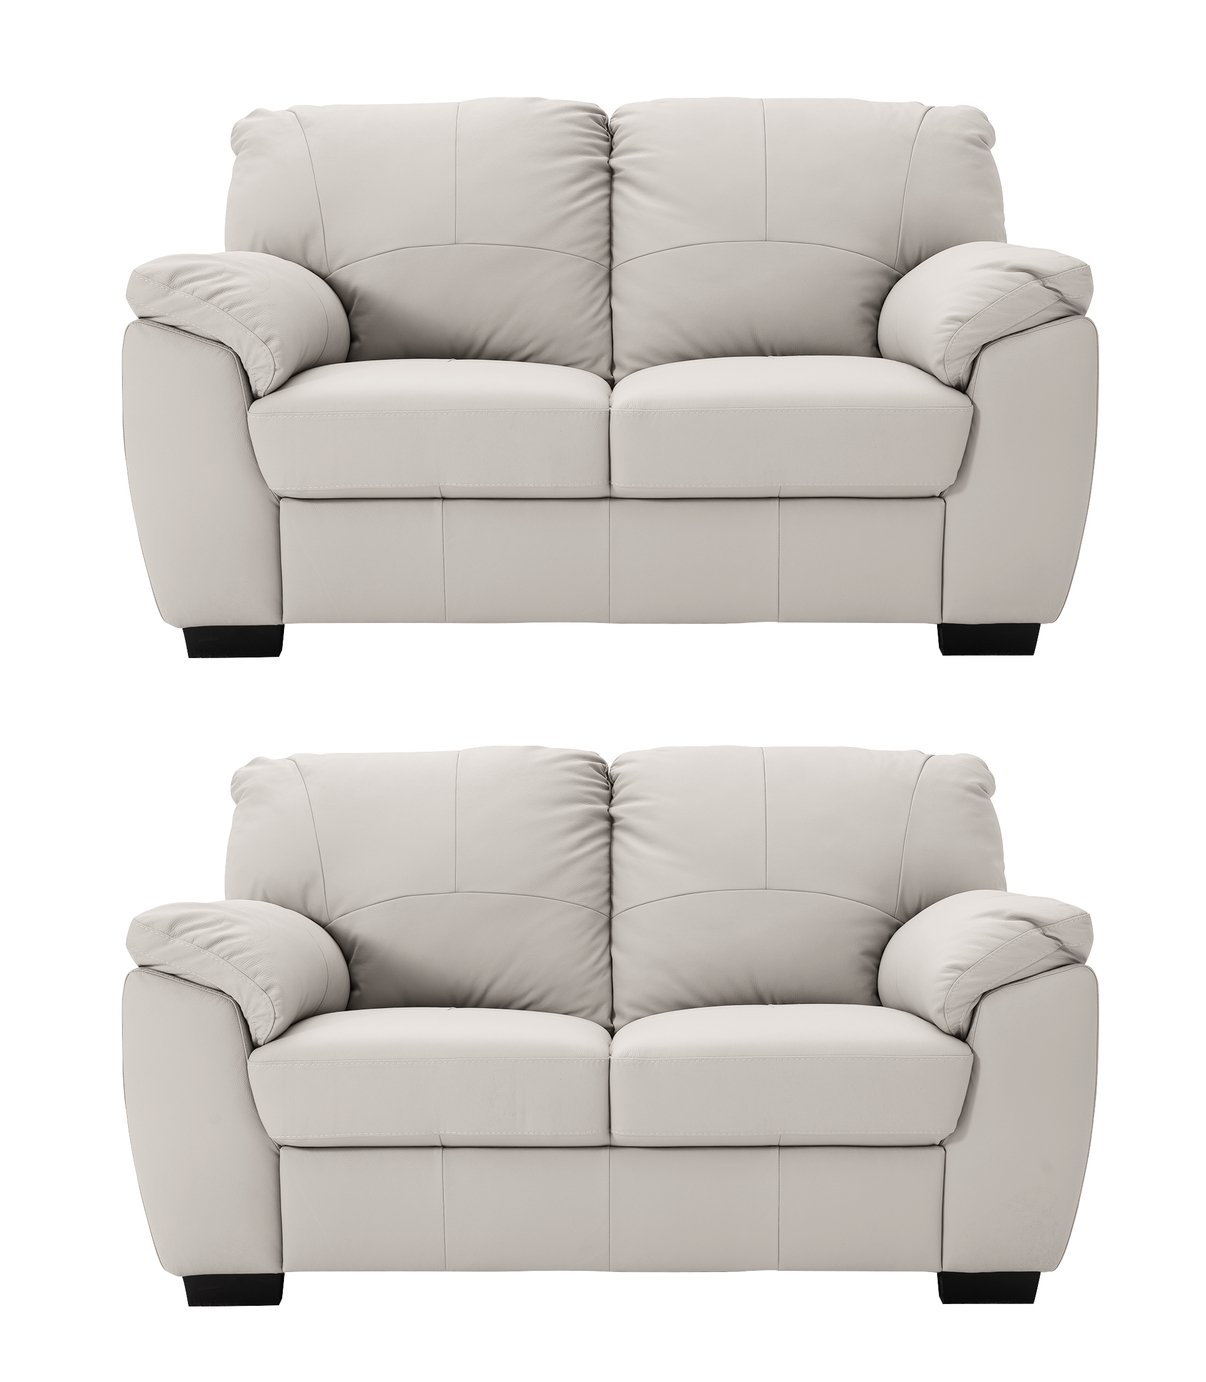 Argos Home Milano Pair of Leather 2 Seater Sofa - Light Grey